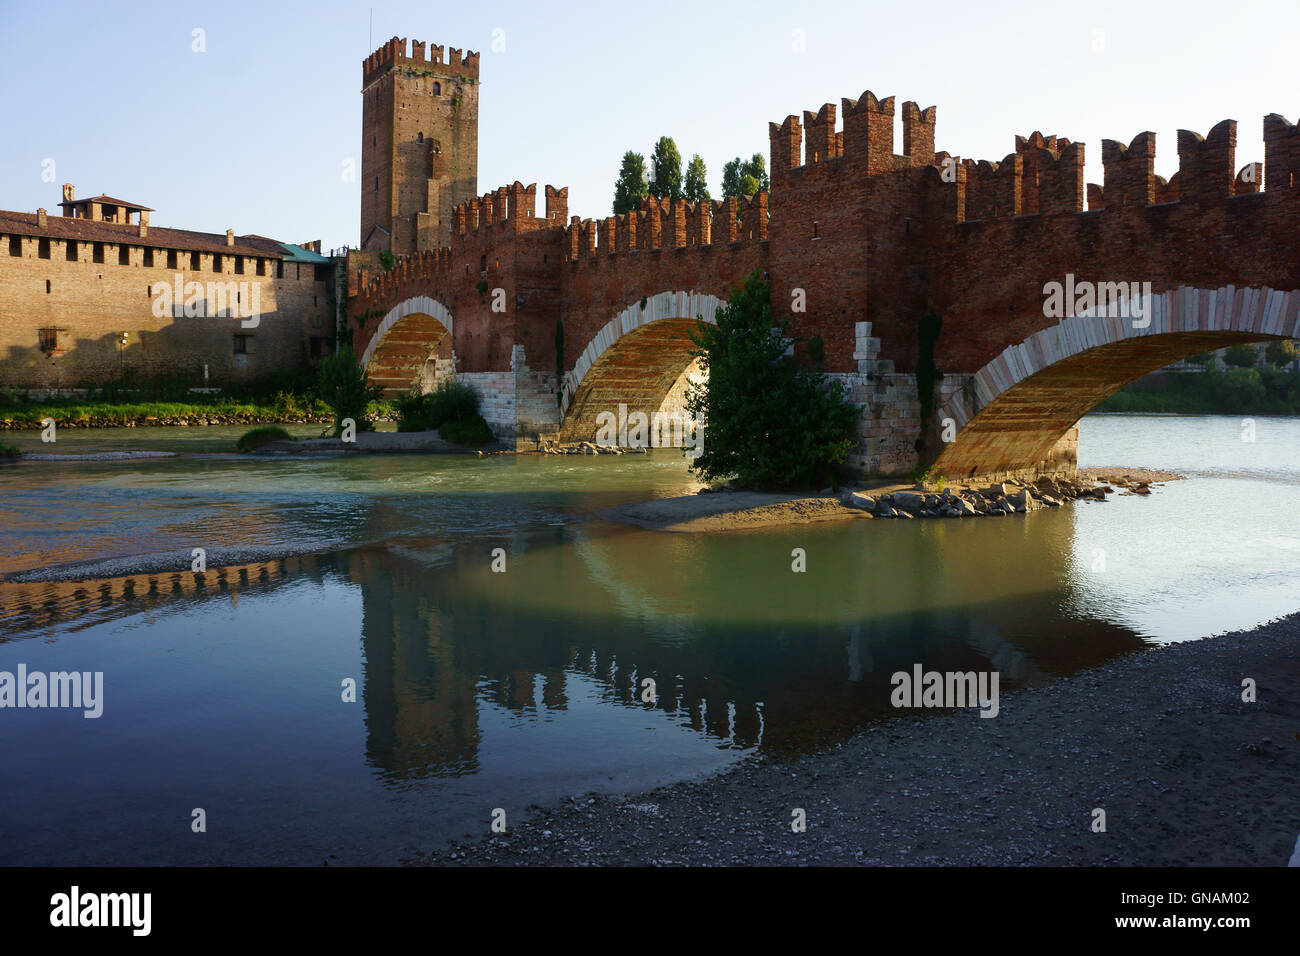 Castelvecchio and bridge across Adige river, Scaglieri castle, Verona Province Verona, Italy Stock Photo